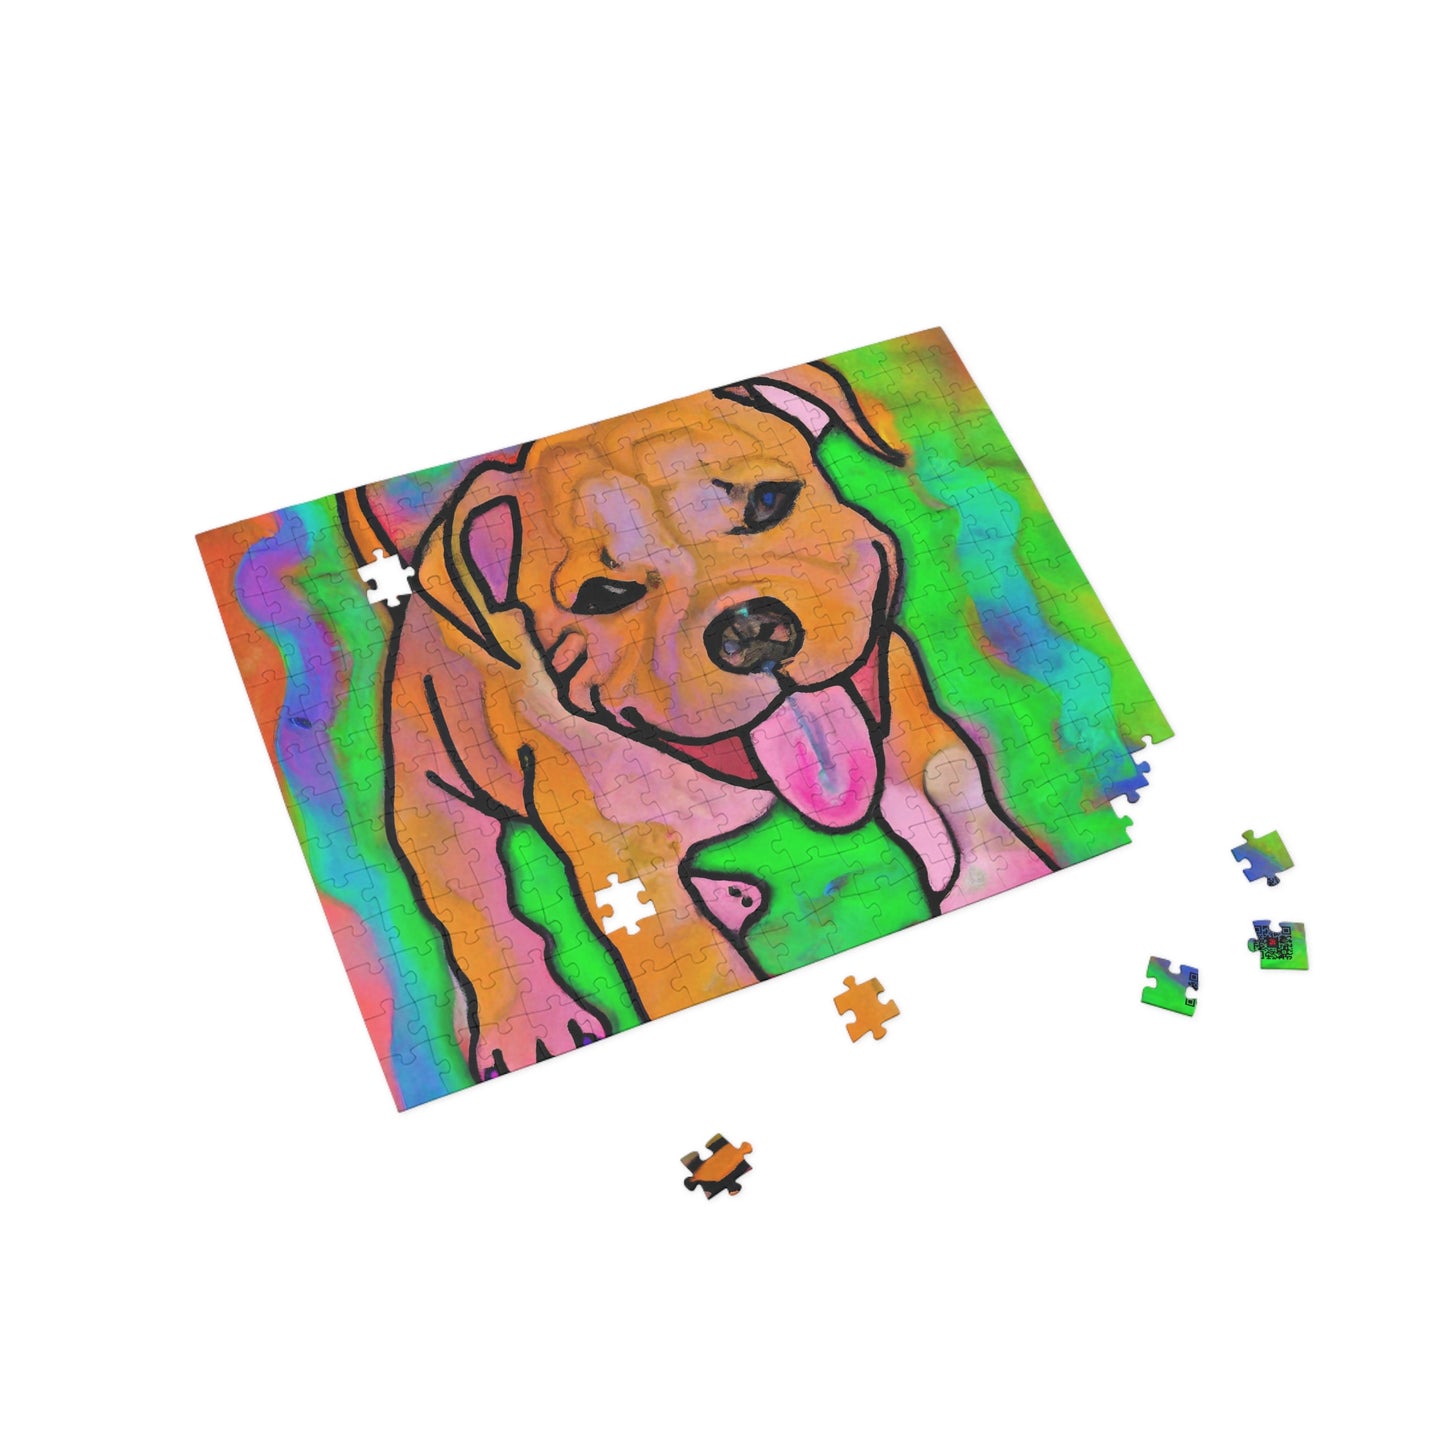 Aristonte Royaltye - Pitbull Puppy - Puzzle